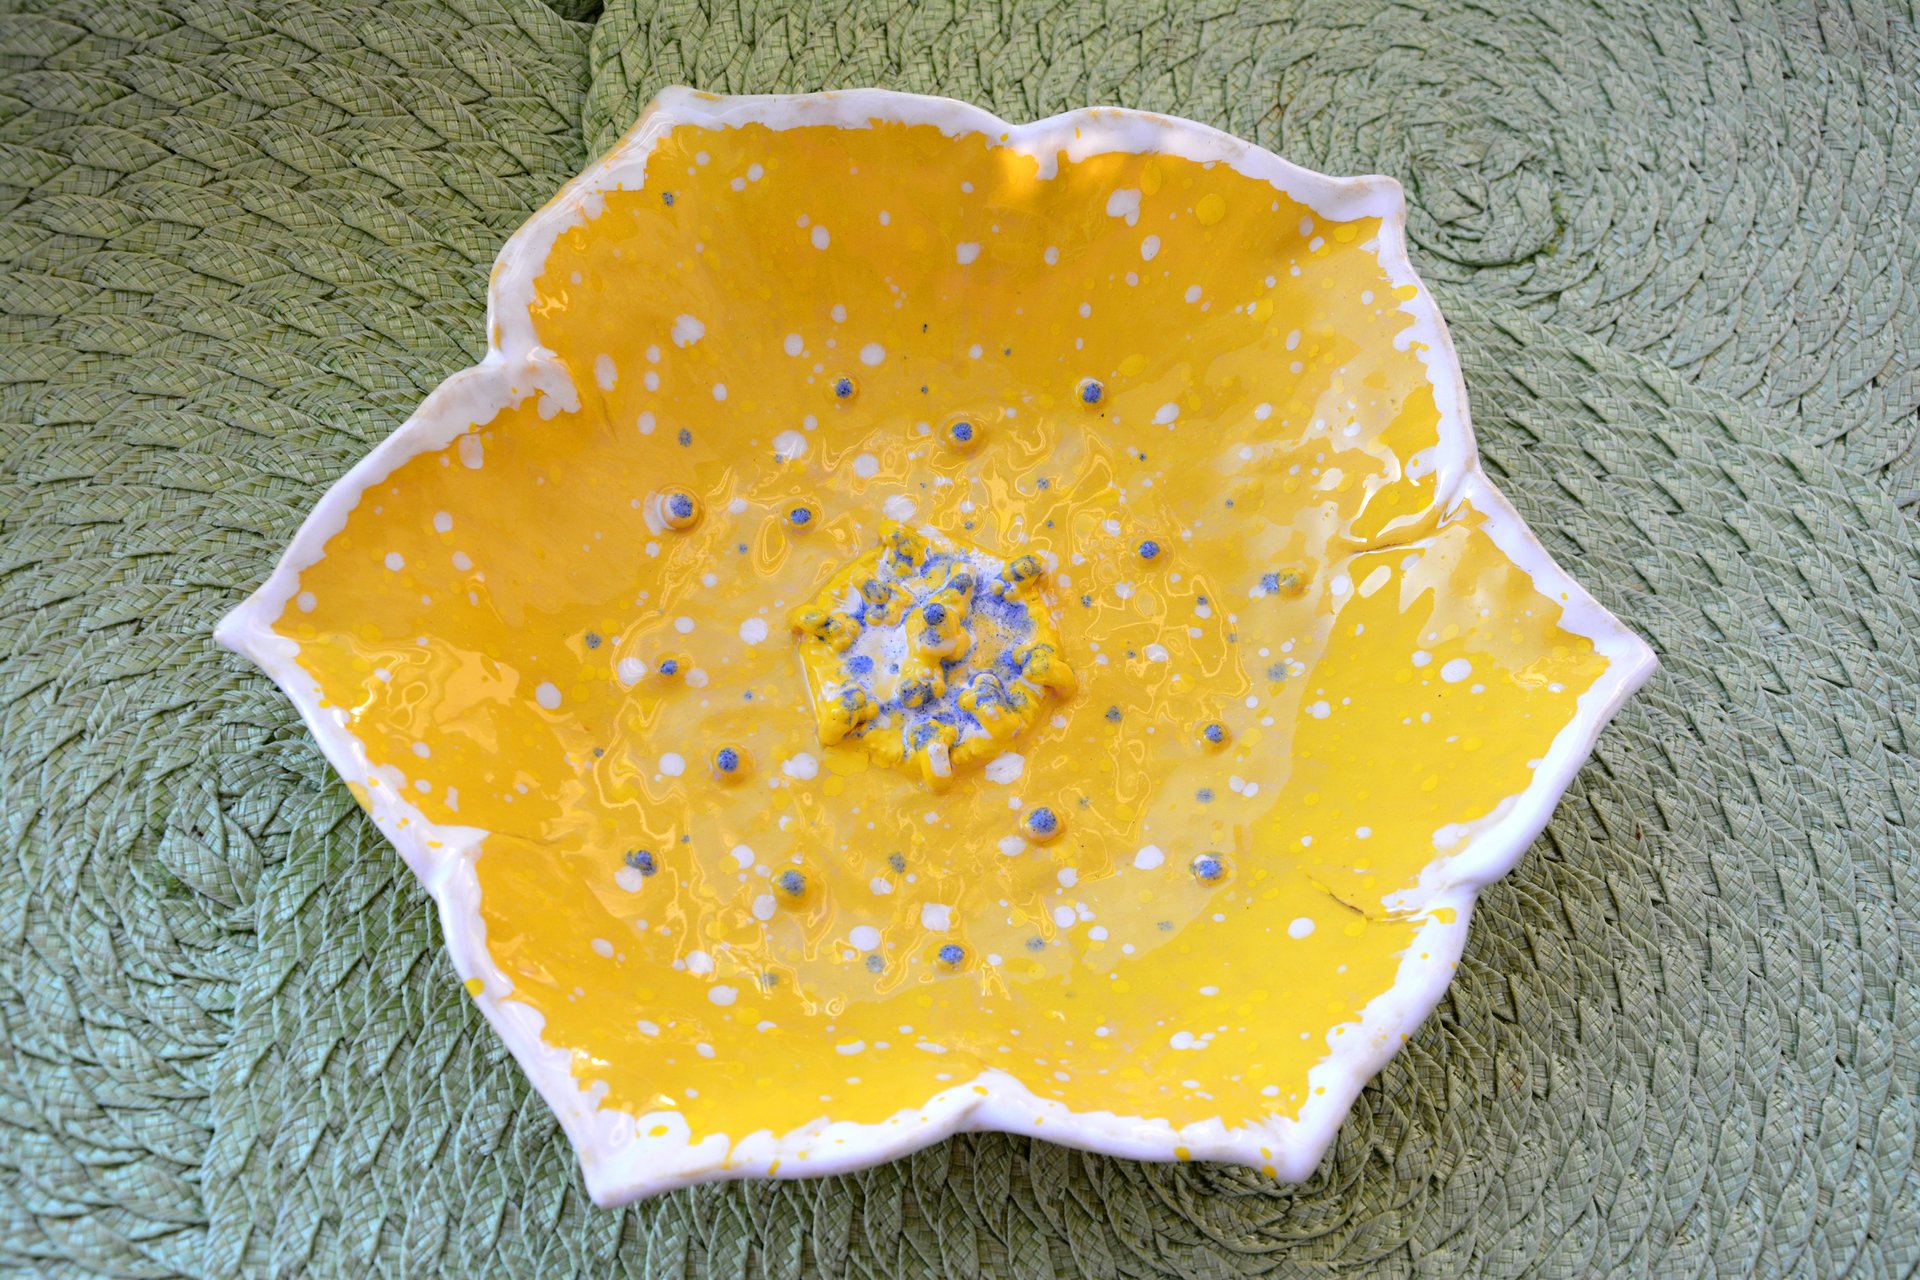 Yellow flower - Ceramic dishes, max diameter - 25 cm, photo 1 of 3.